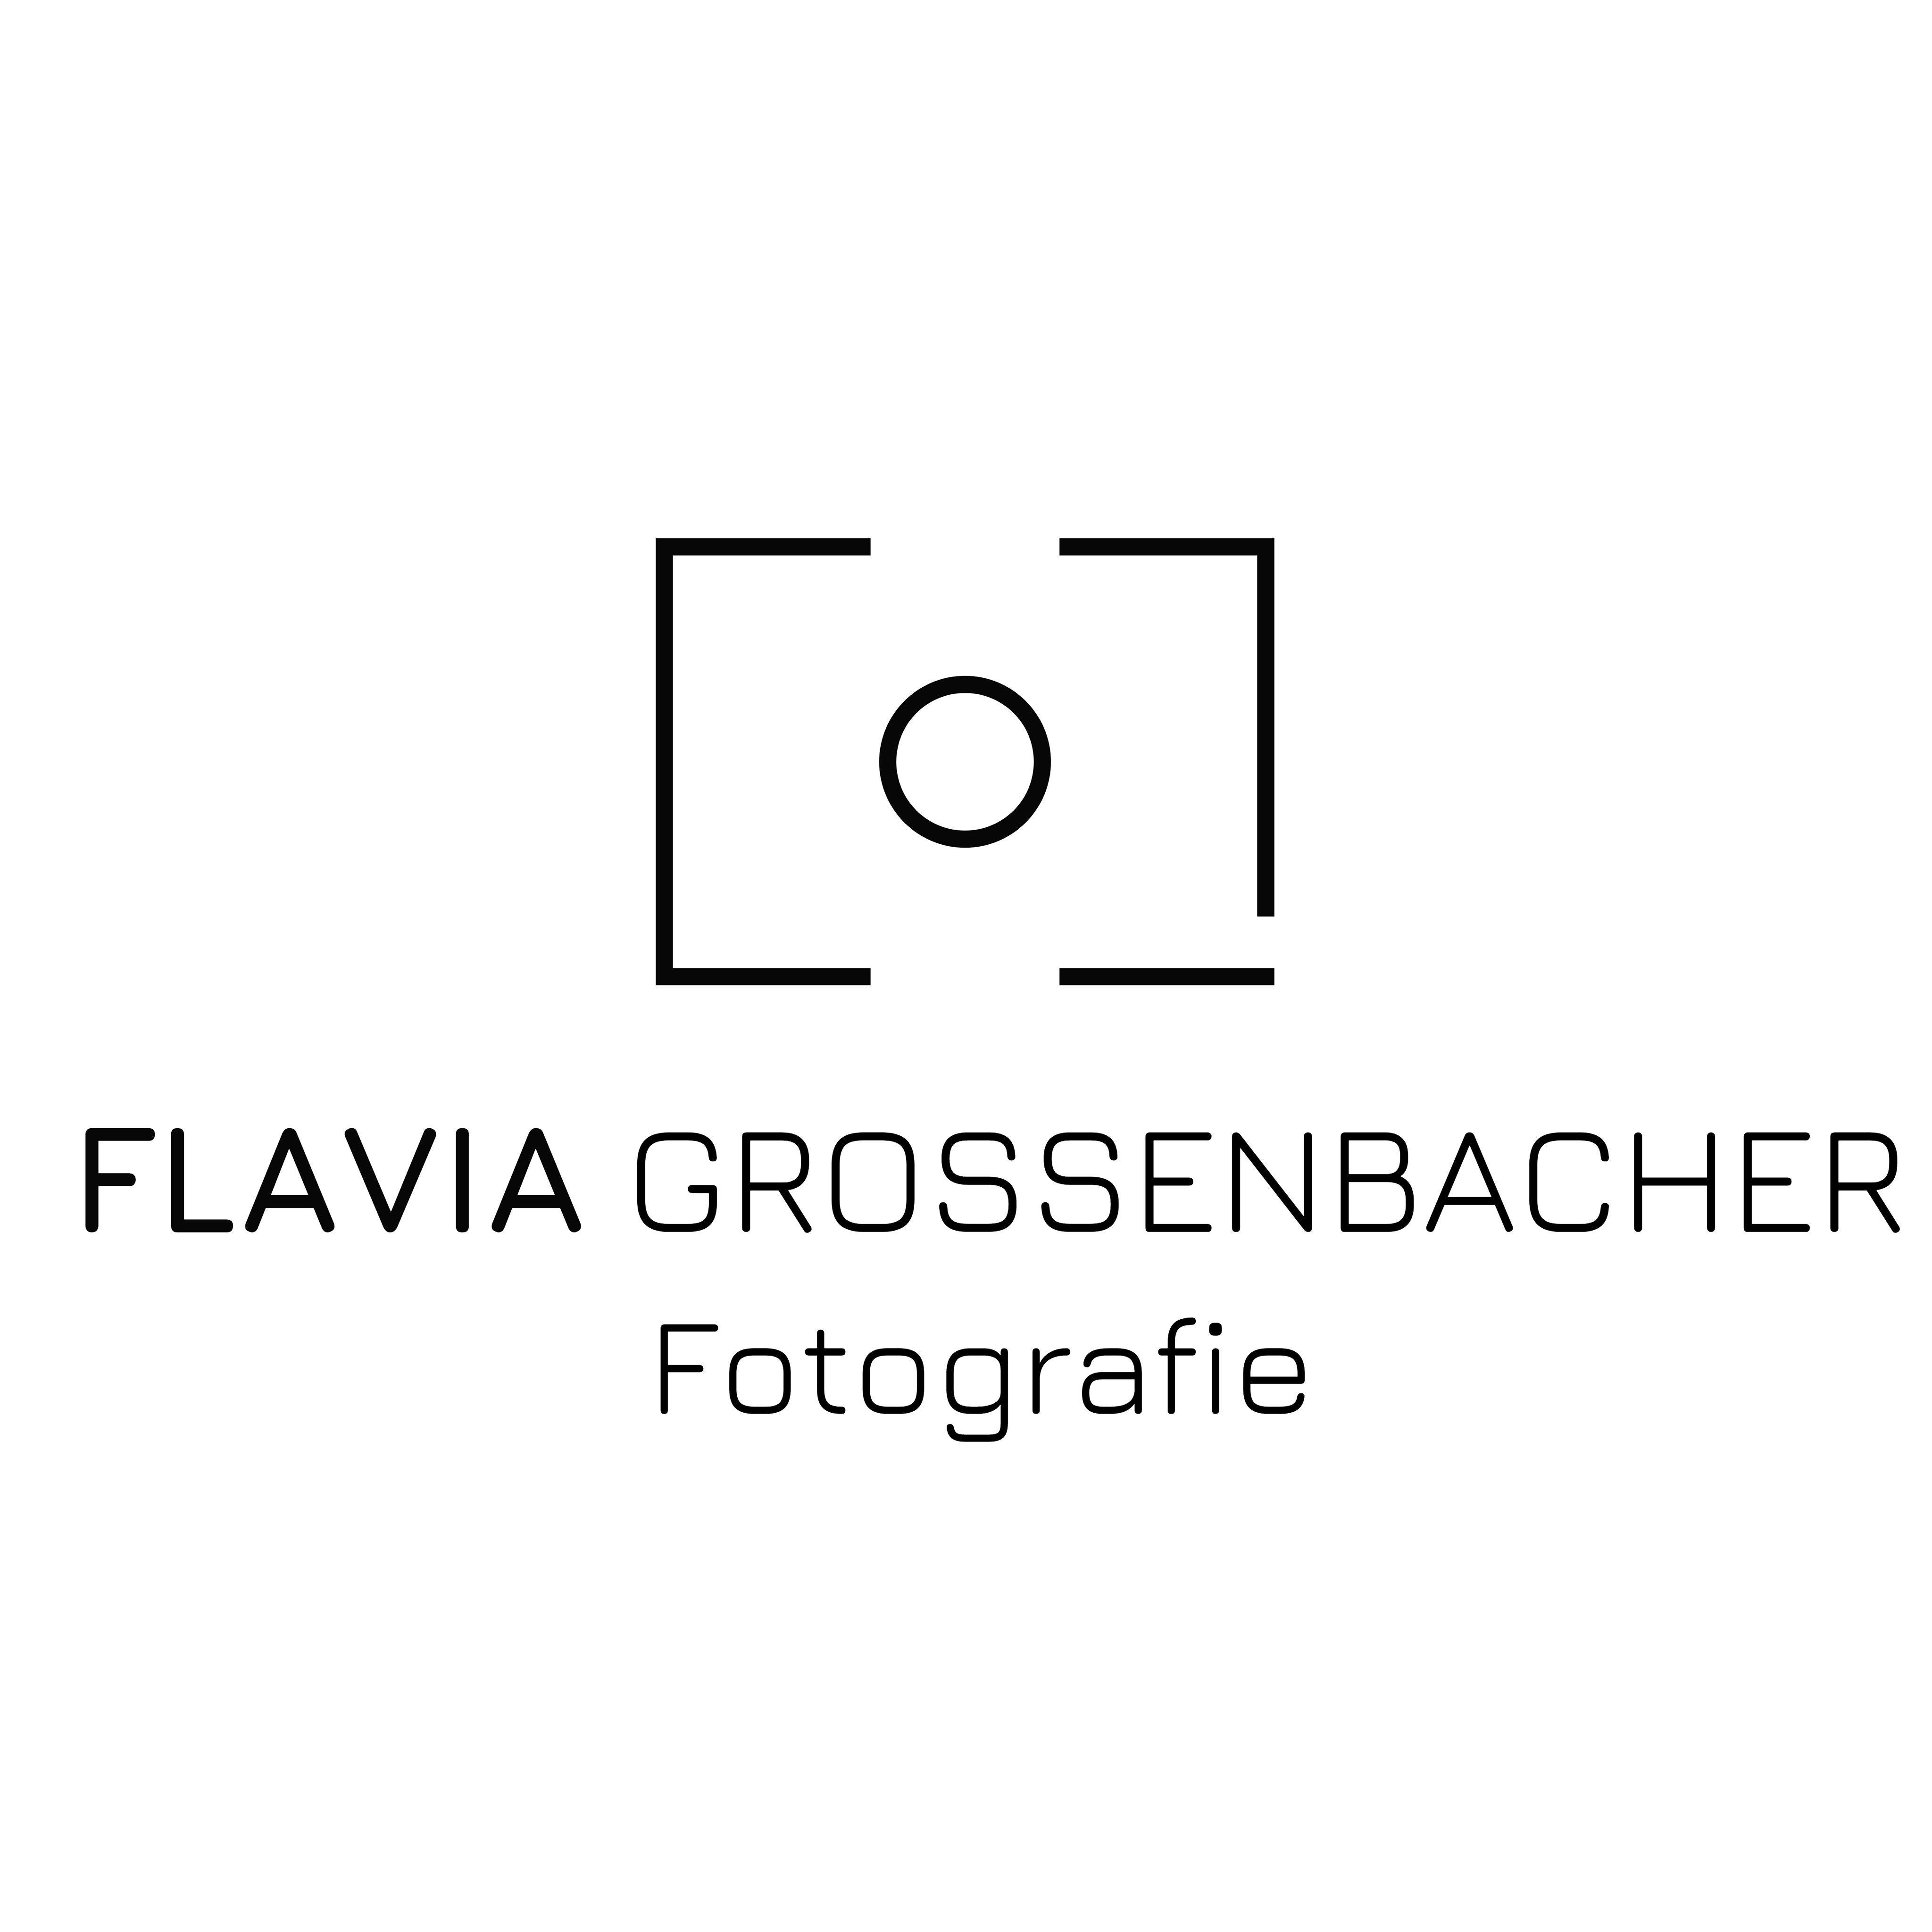 Flavia Grossenbacher